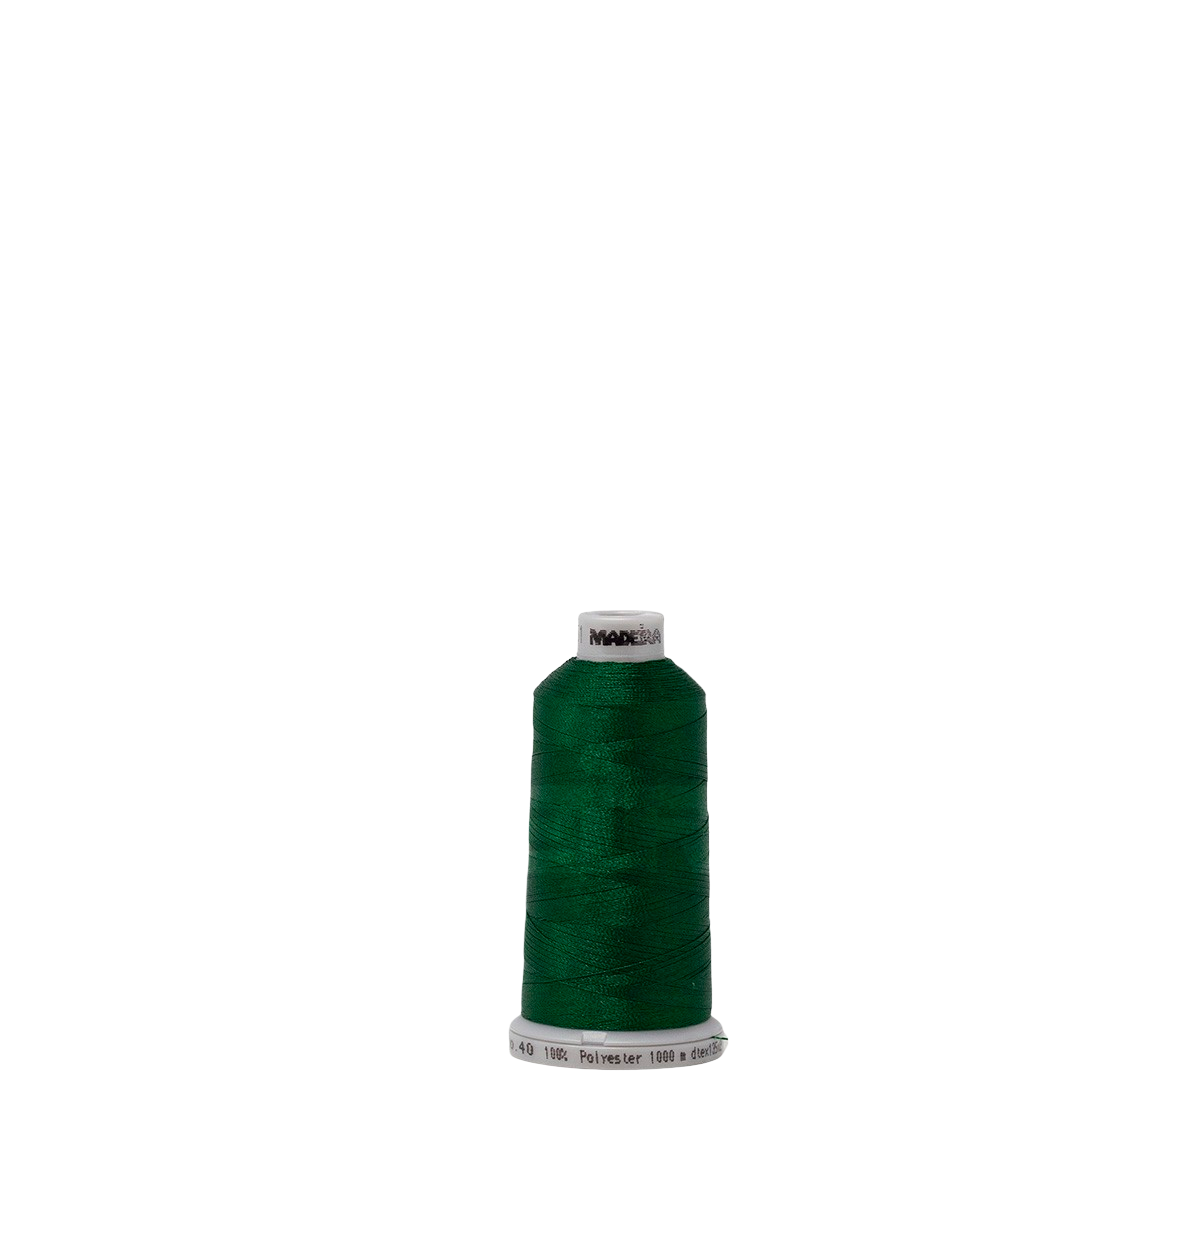 Cadmium Green 1851 #40 Weight Madeira Polyneon Thread - 0